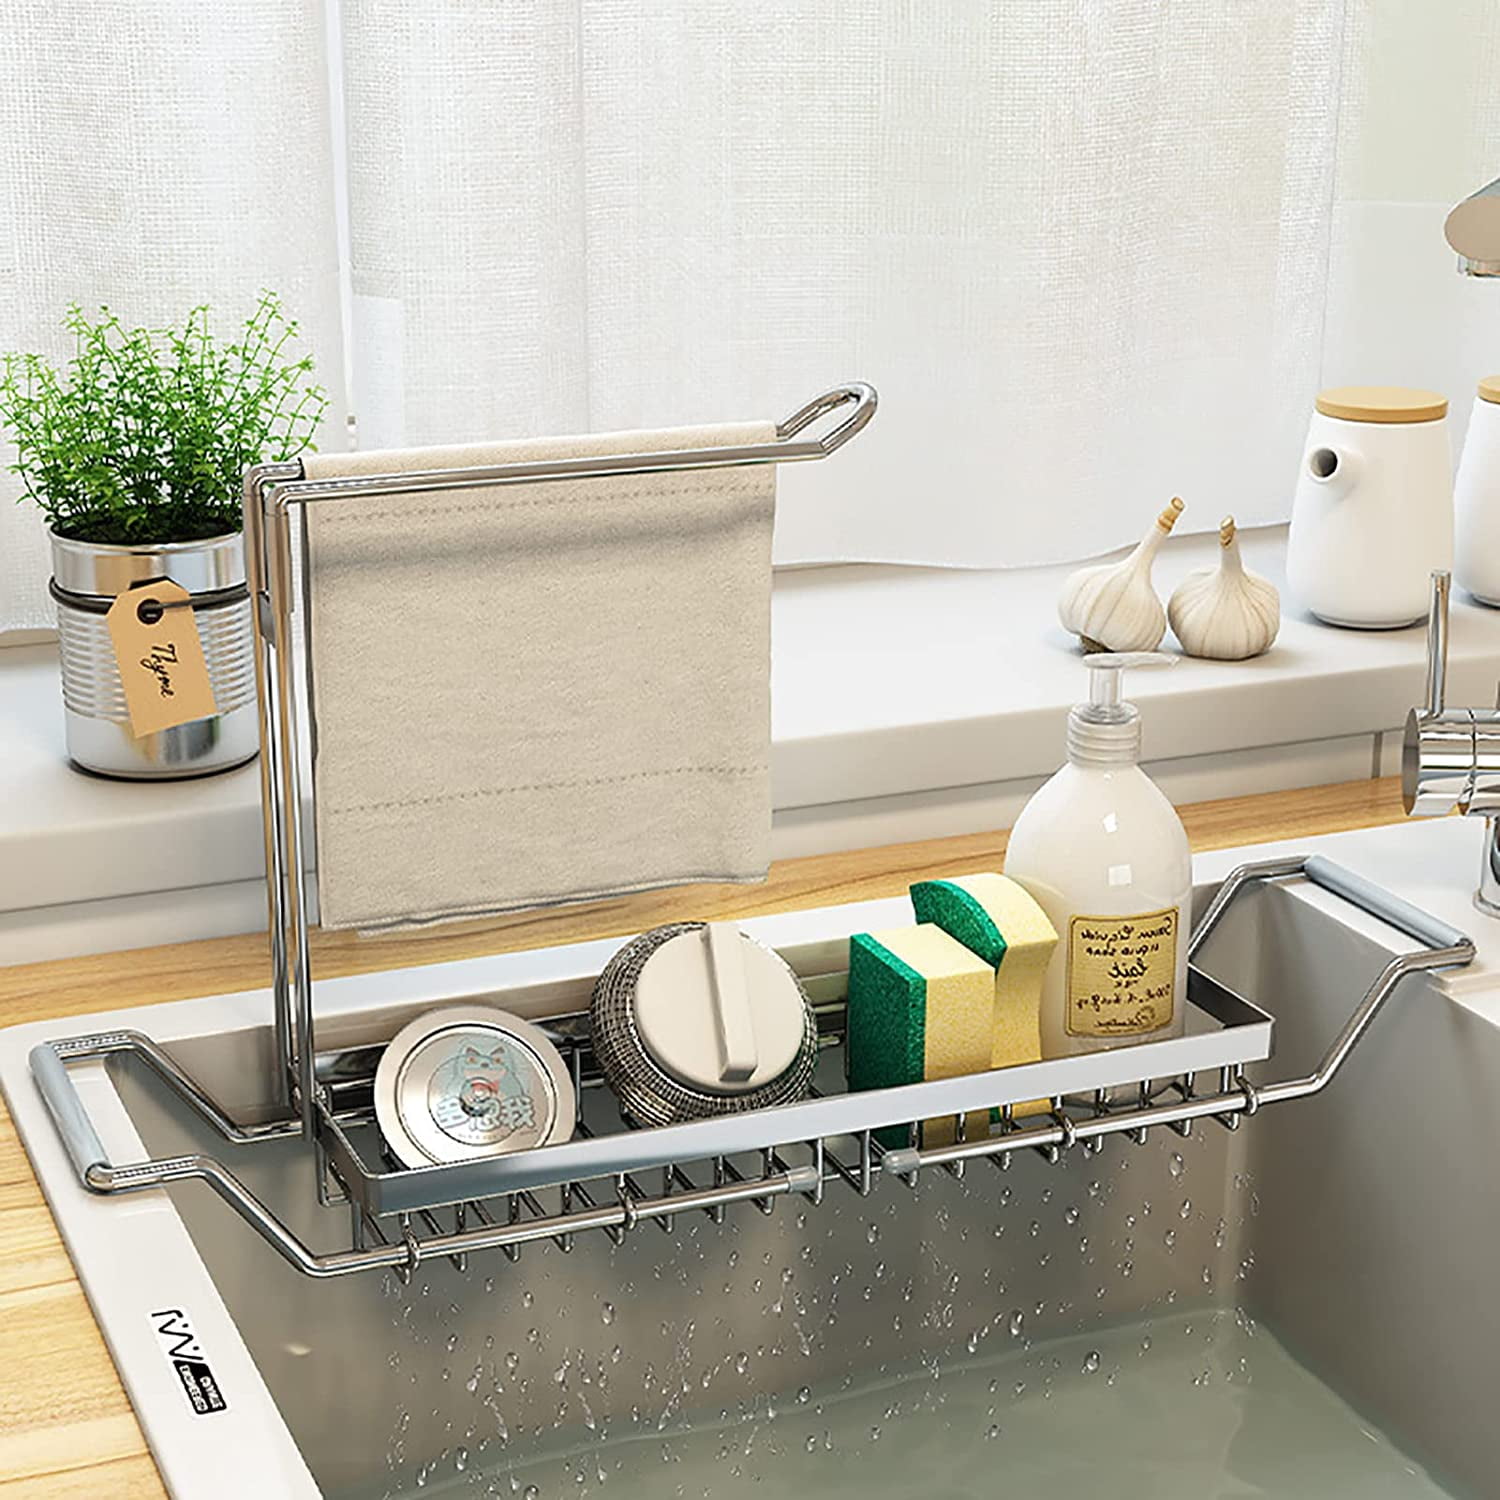 amazingfashion Adjustable Kitchen Sink Caddy Sponge Holder, Removable Rubber Hanging Sink Caddy Brush Holder, for Kitchen Storage, Flexible Sink Rack Dish Drainer